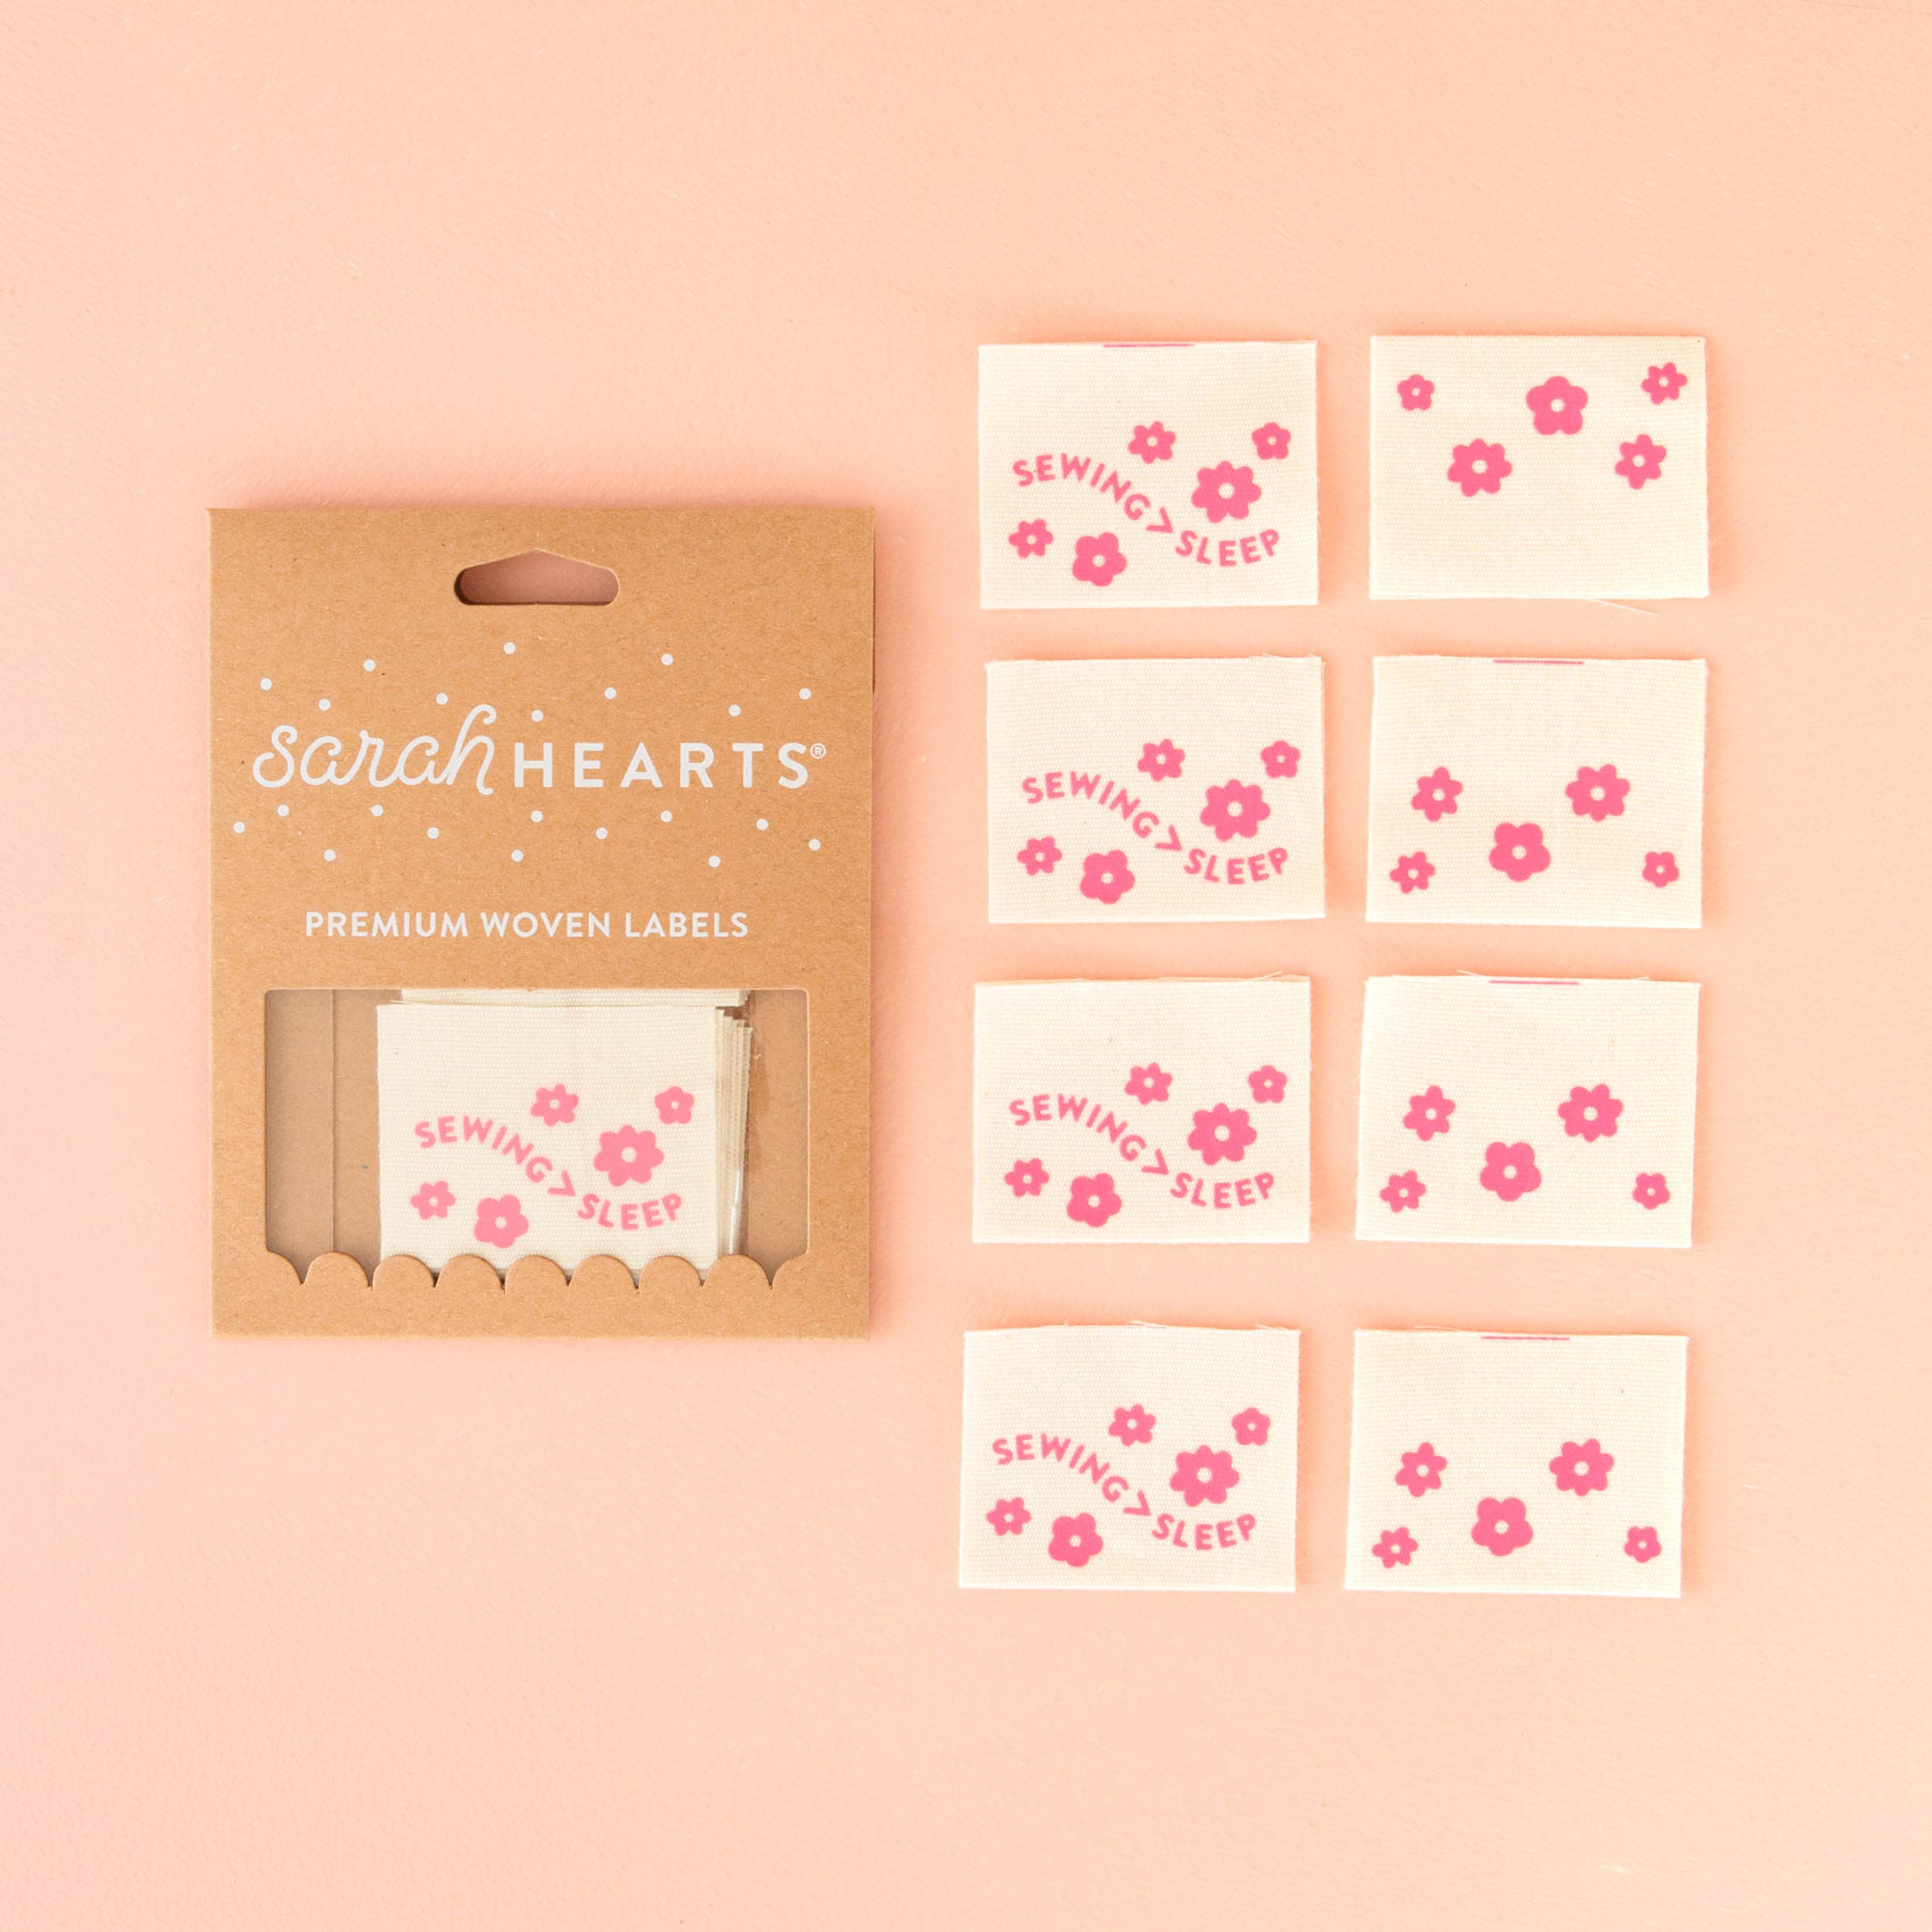 Sarah Hearts - Sewing > Sleep Pink Organic Cotton Labels - Sewing